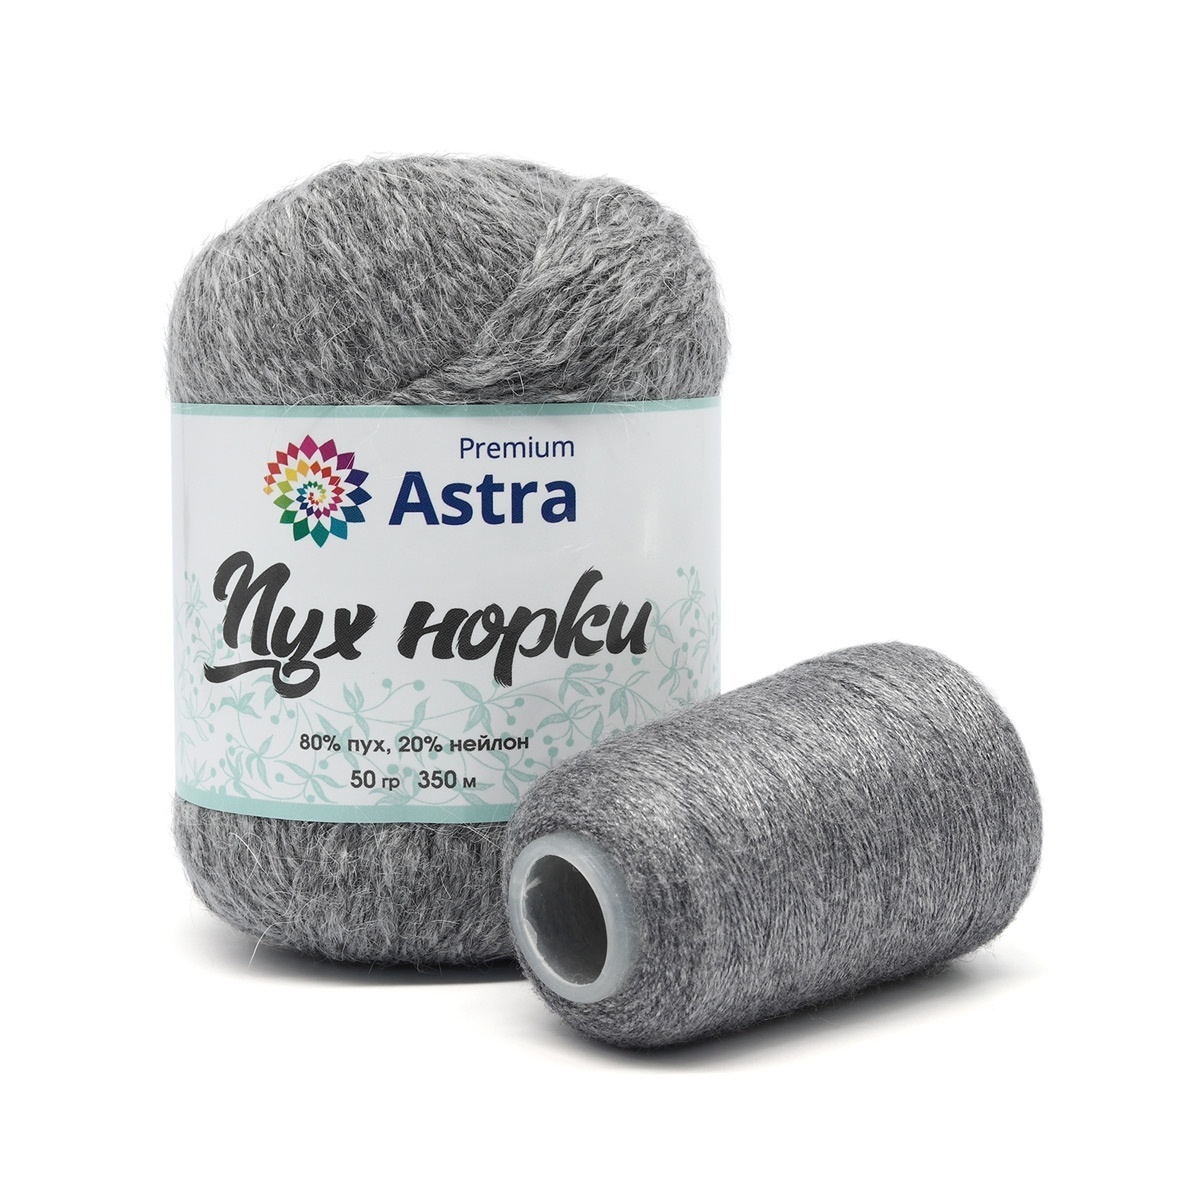 Astra Premium Mink Yarn, 80% mink fluff, 20% nylon, 1 Skein Value Pack, 50g фото 1